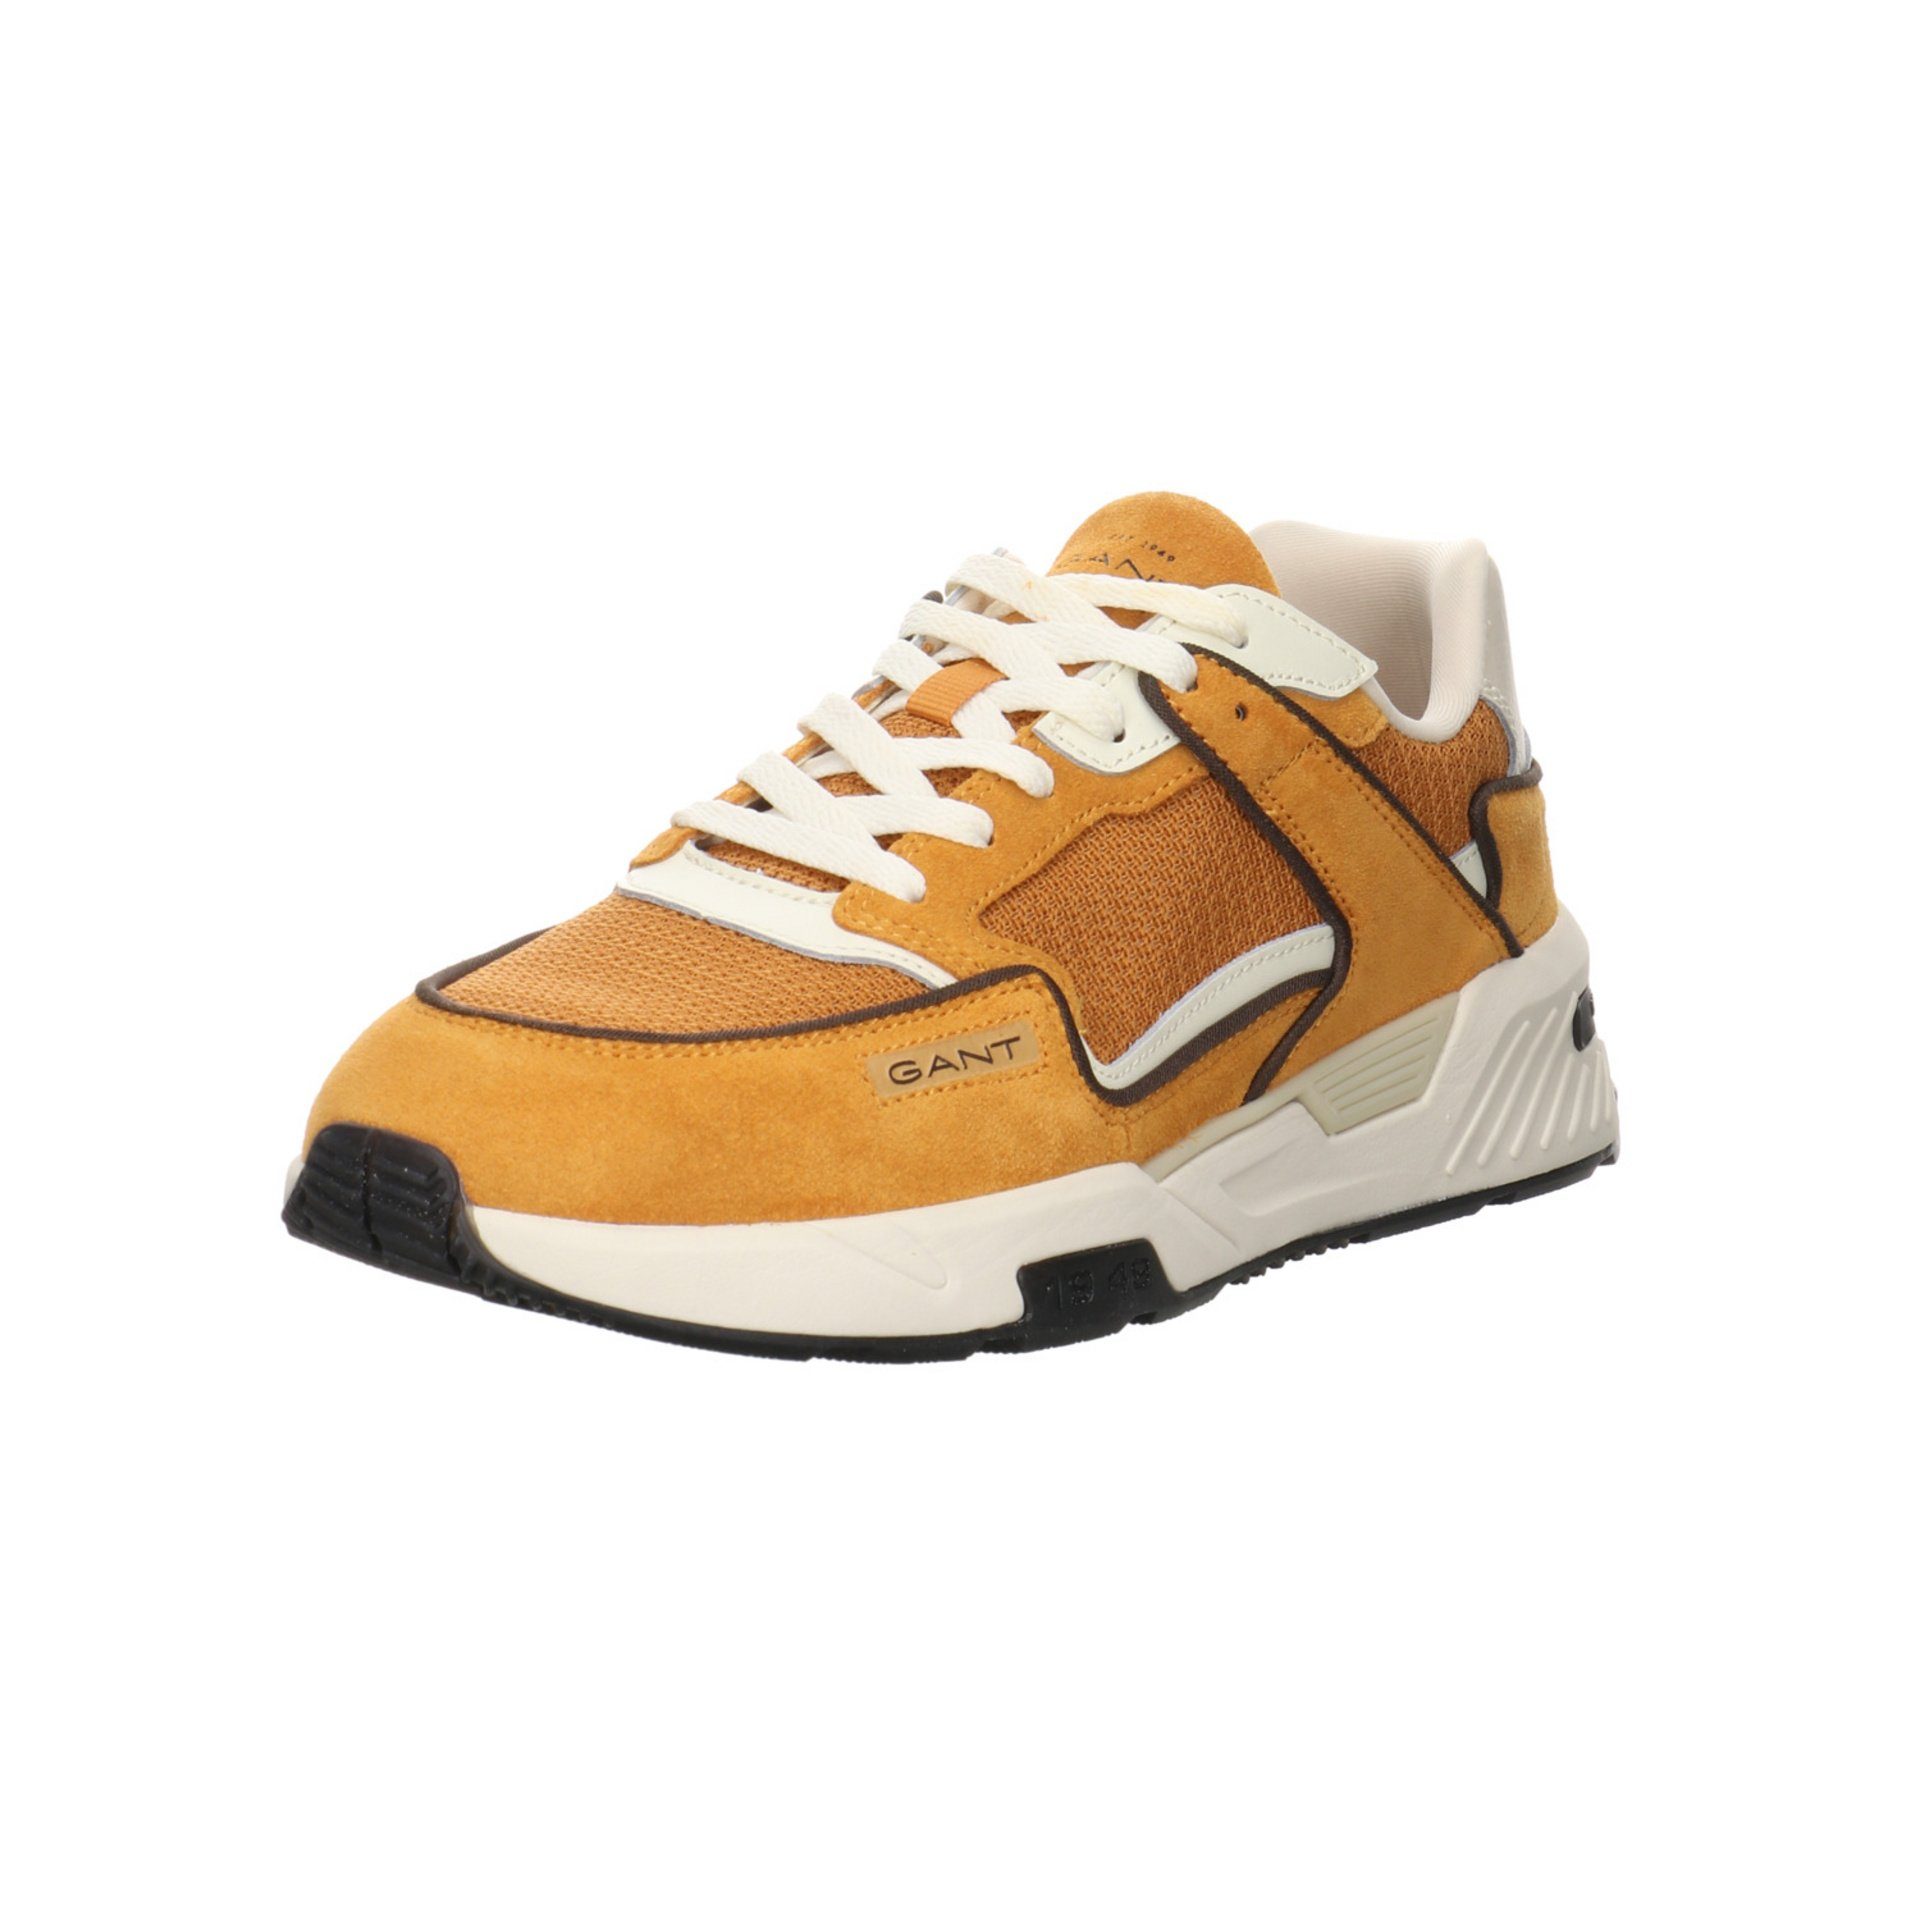 Gant Herren Schnürhalbschuhe Carst Sneaker Sneaker Leder-/Textilkombination golden yellow